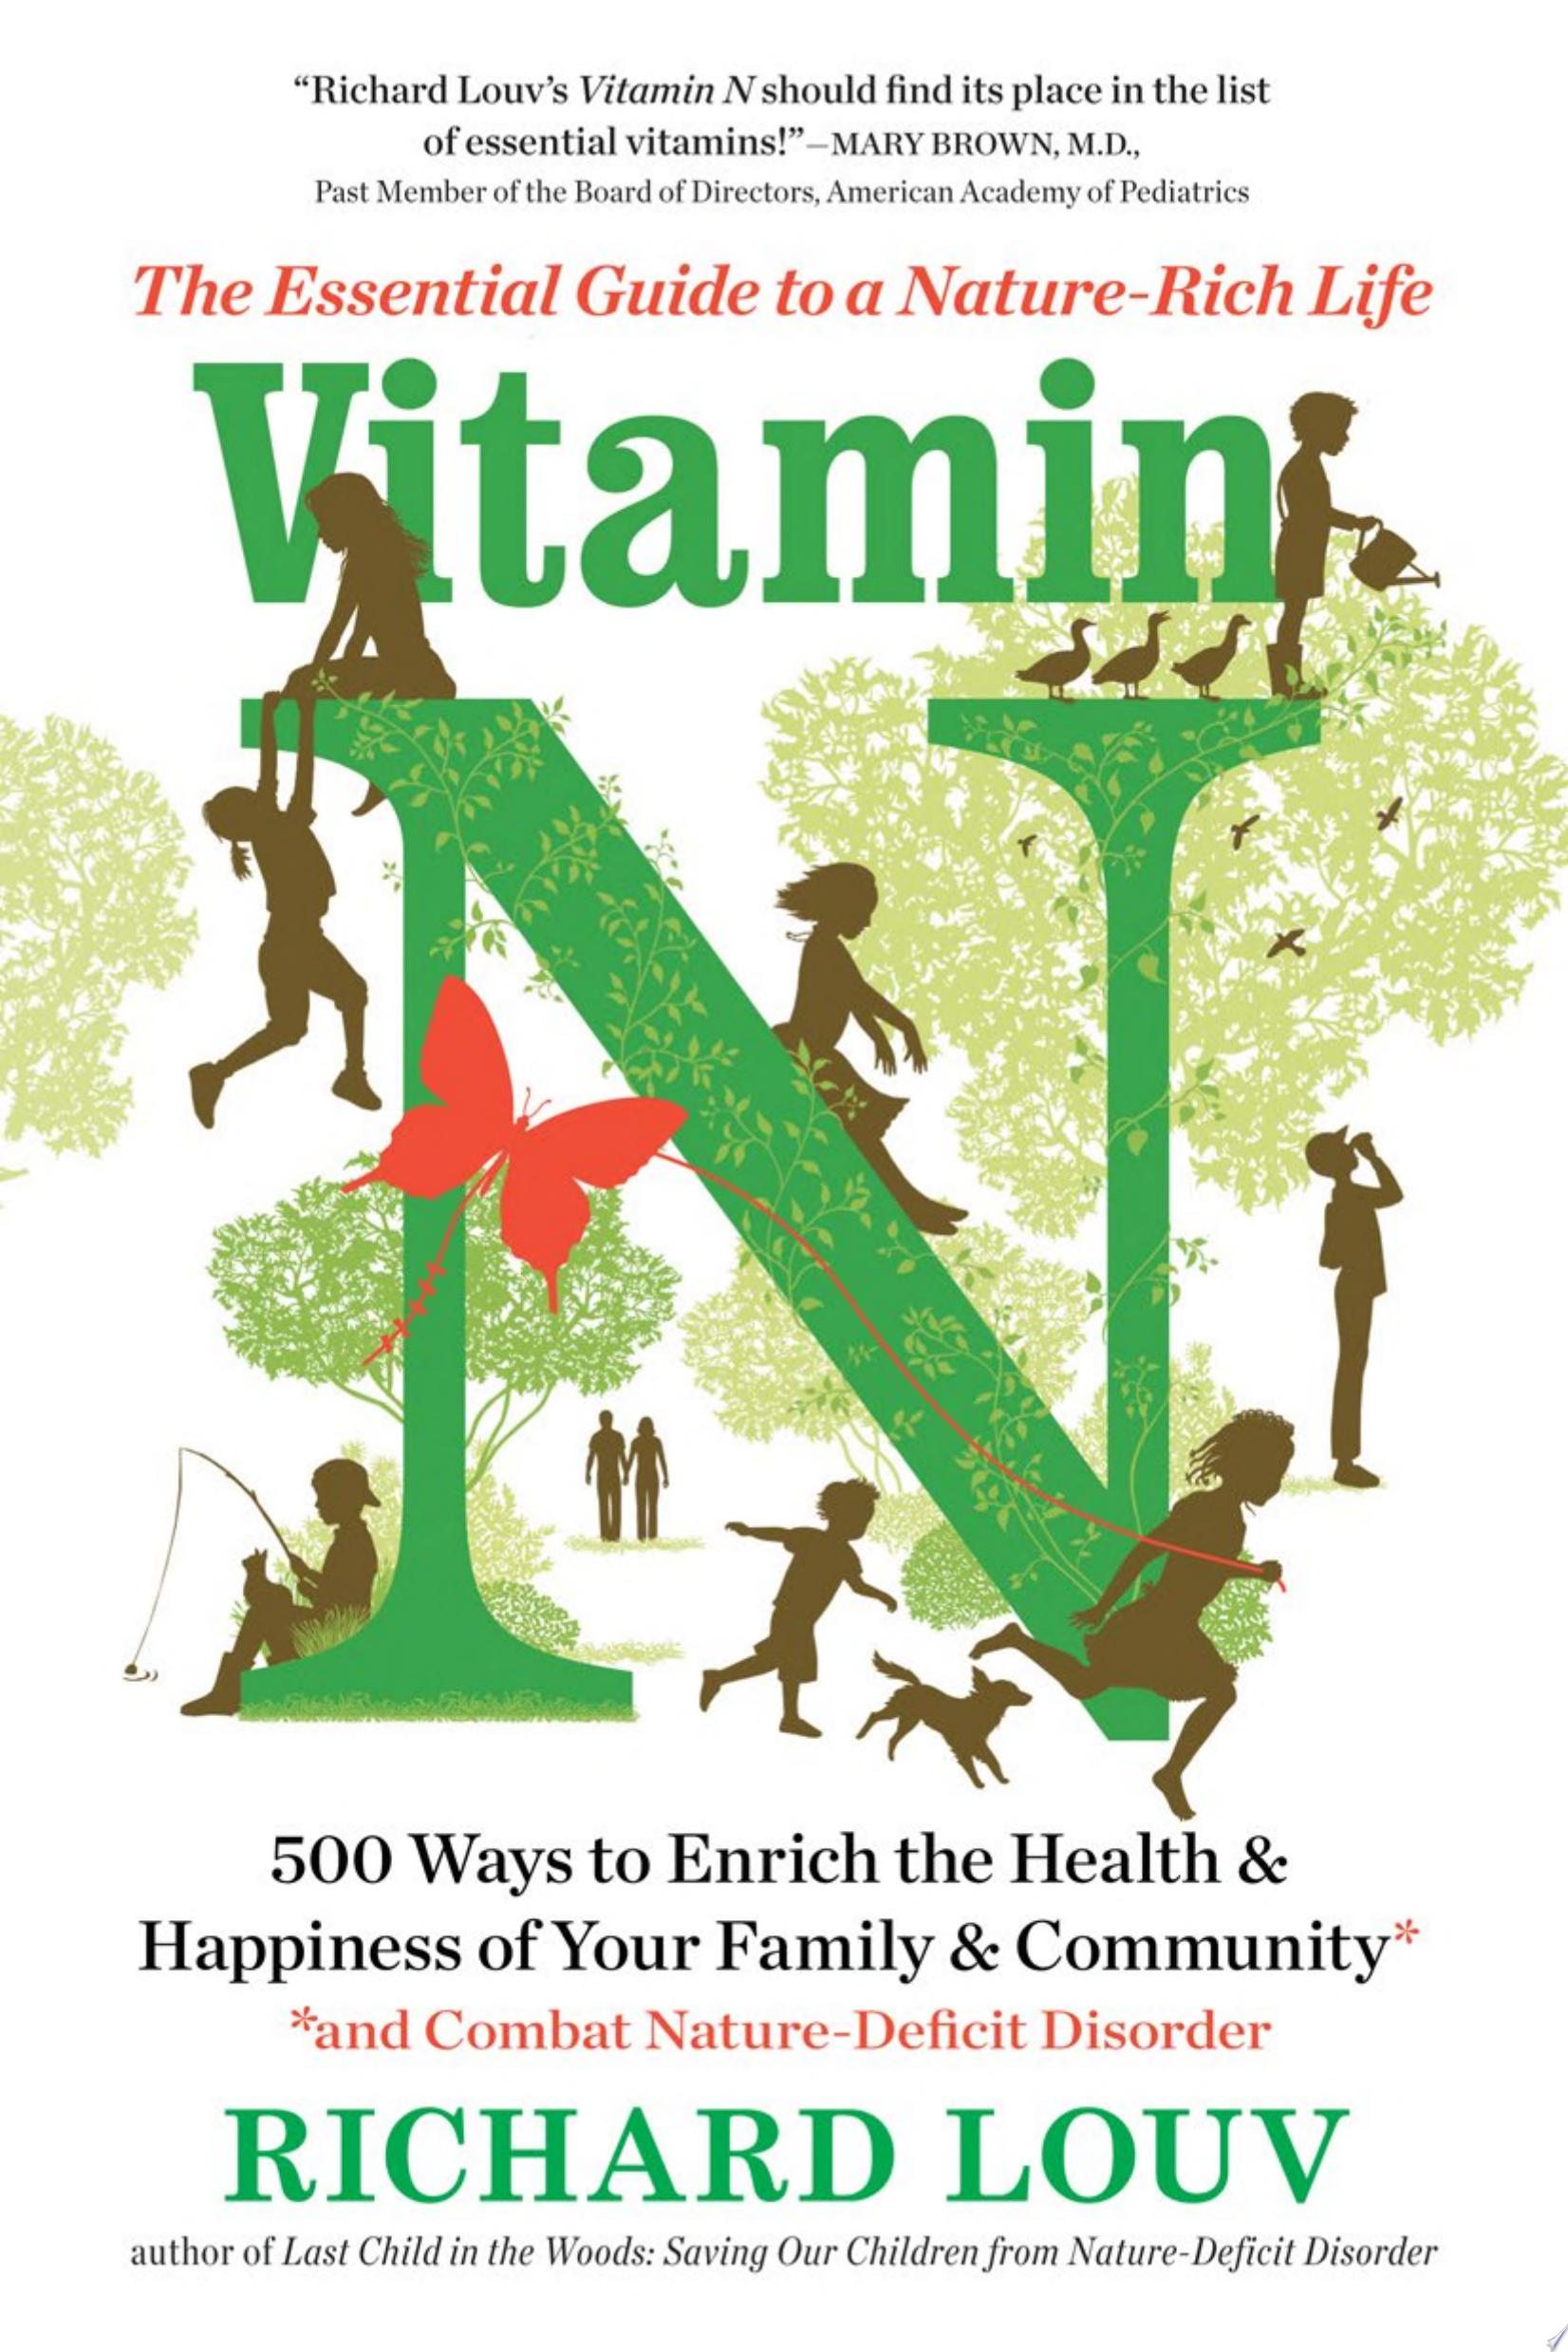 Image for "Vitamin N"